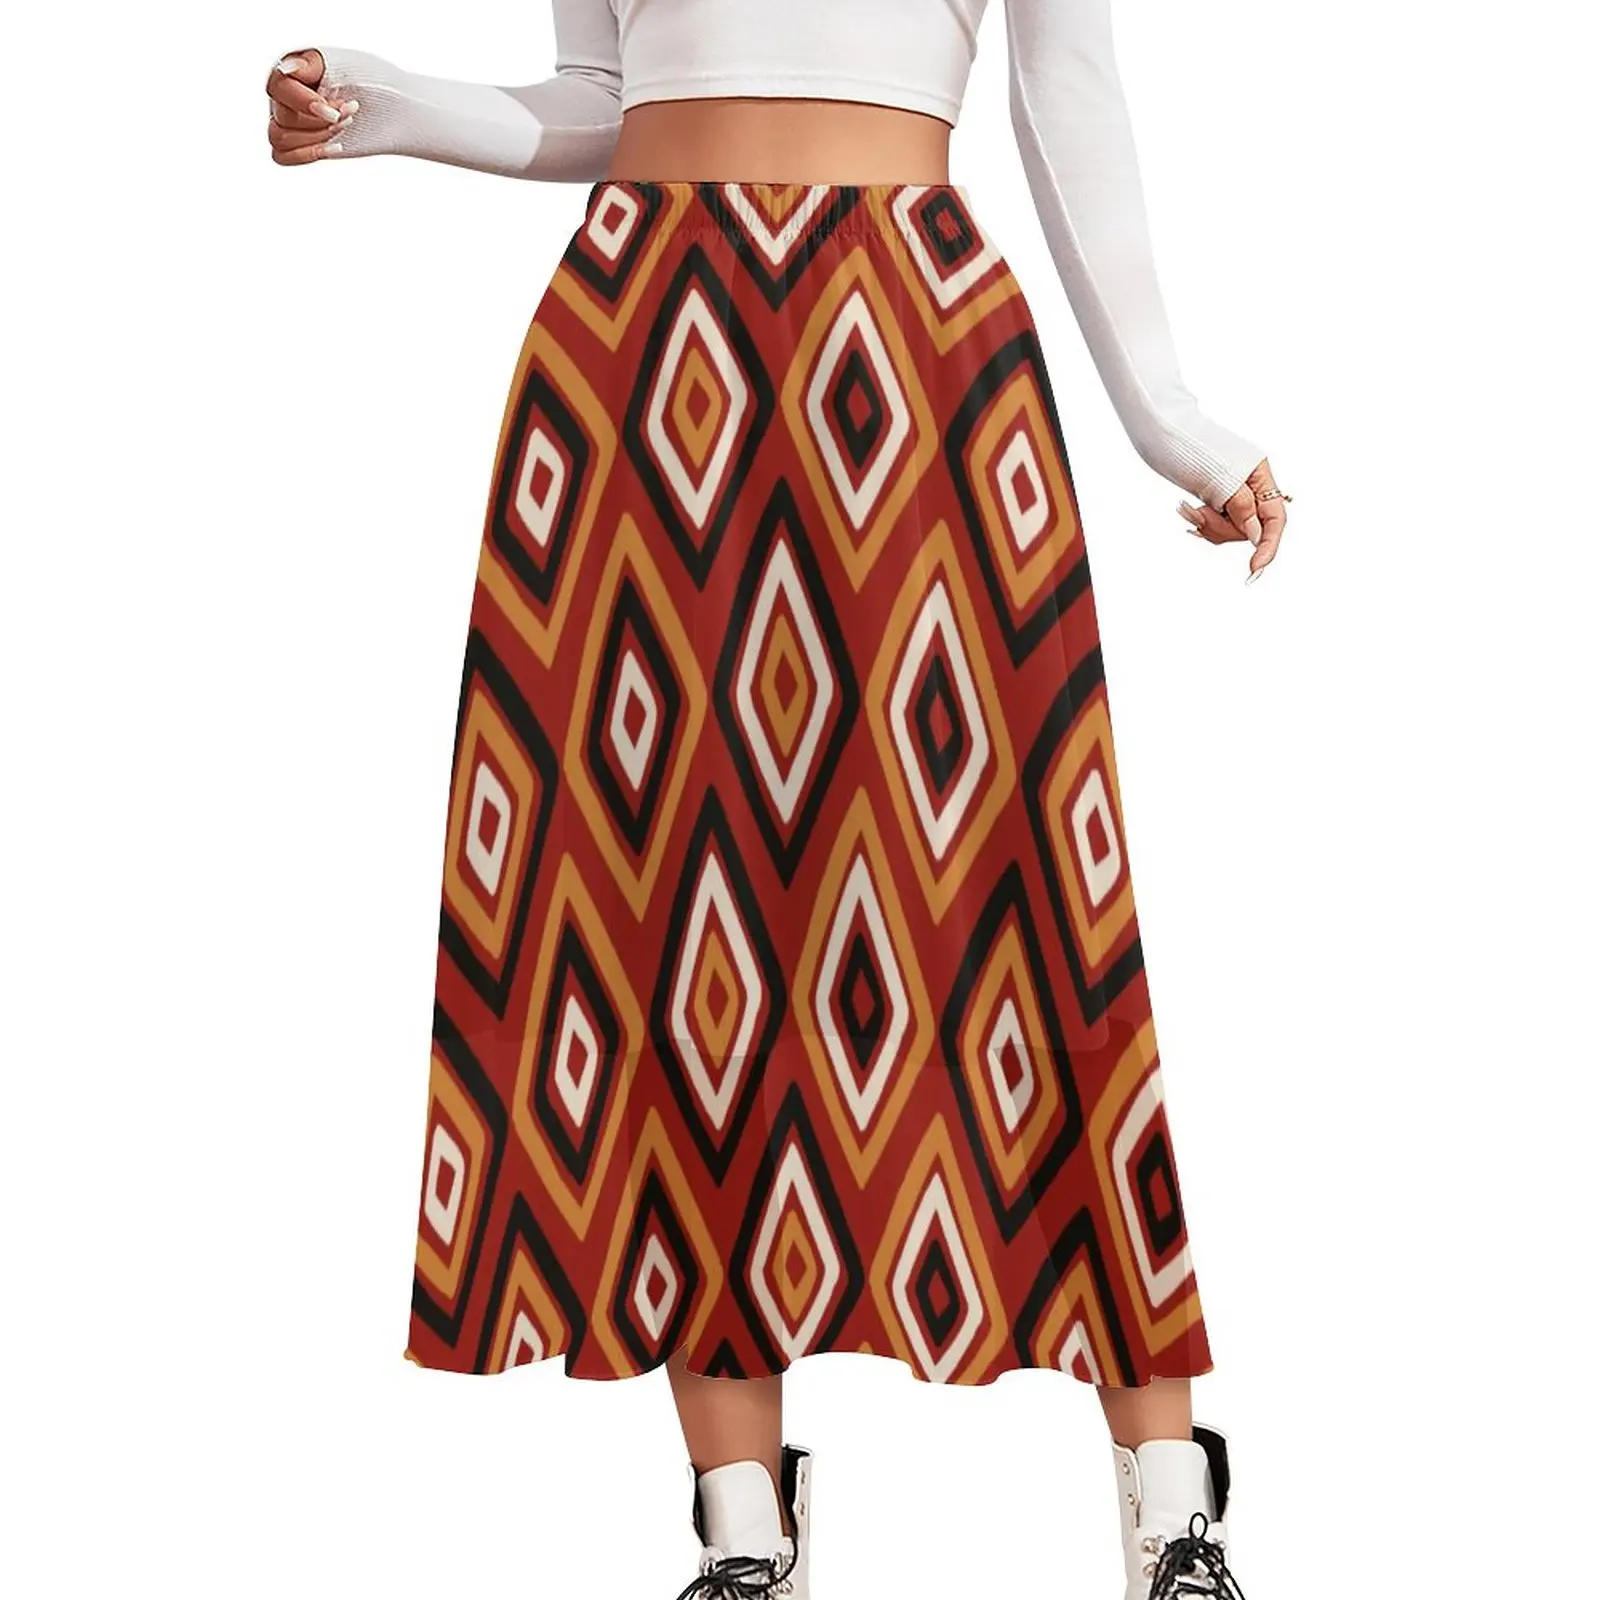 

African Styles Skirt Ladies Retro Geometry Kawaii Boho Skirts Pattern Elastic Waist Street Wear A-line Skirt 2XL 3XL 4XL